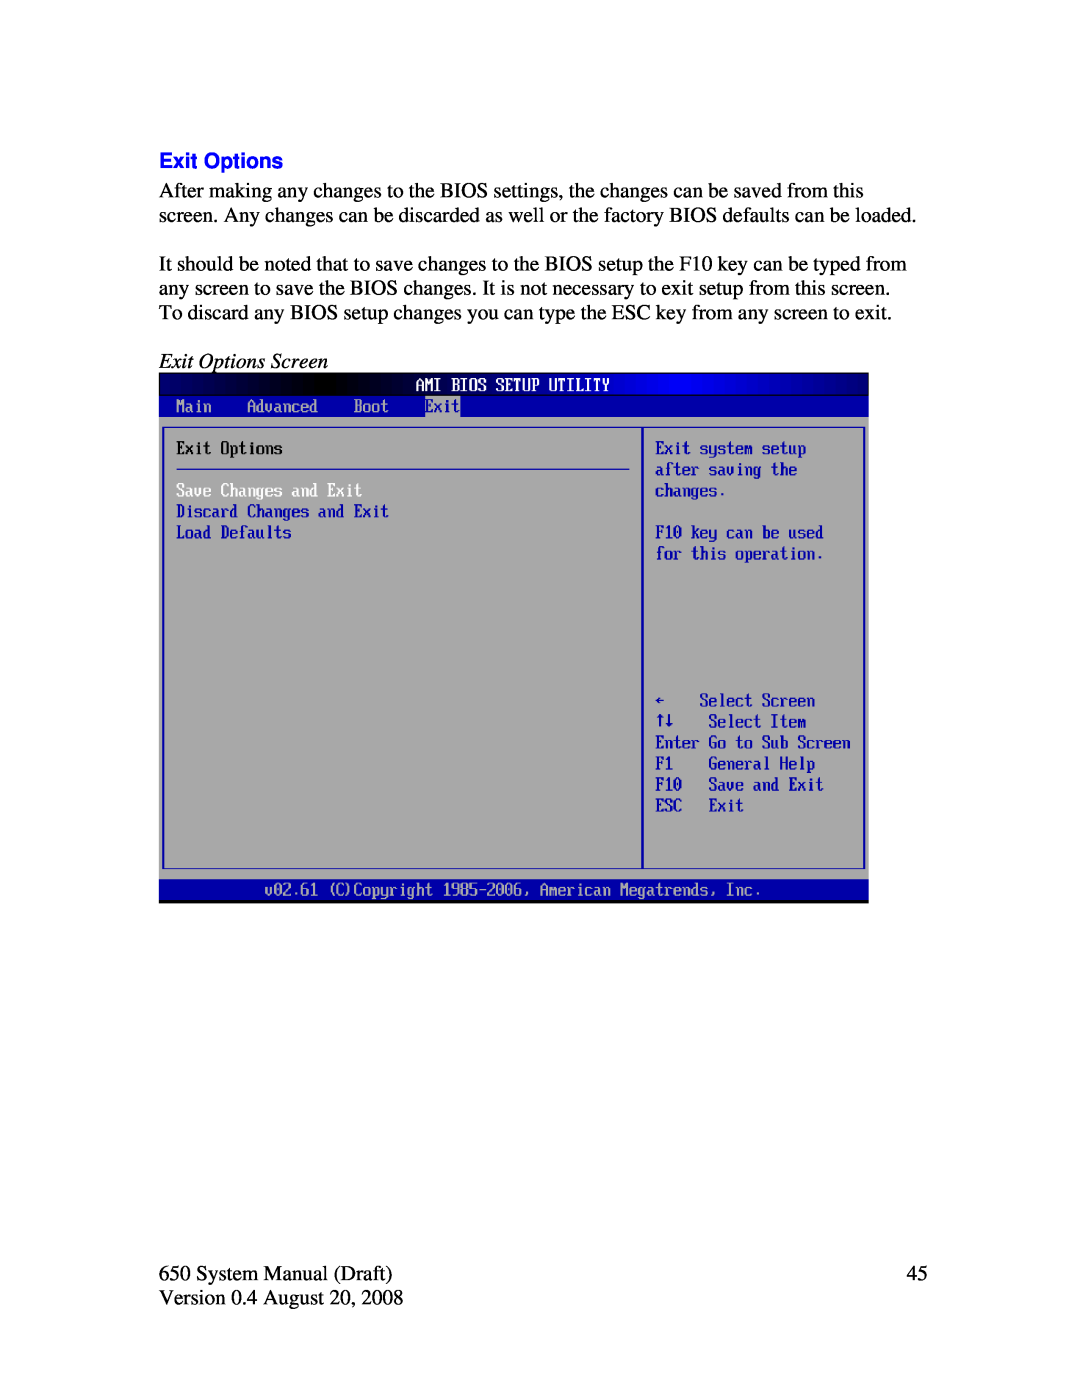 Intel J2 650 system manual Exit Options Screen 